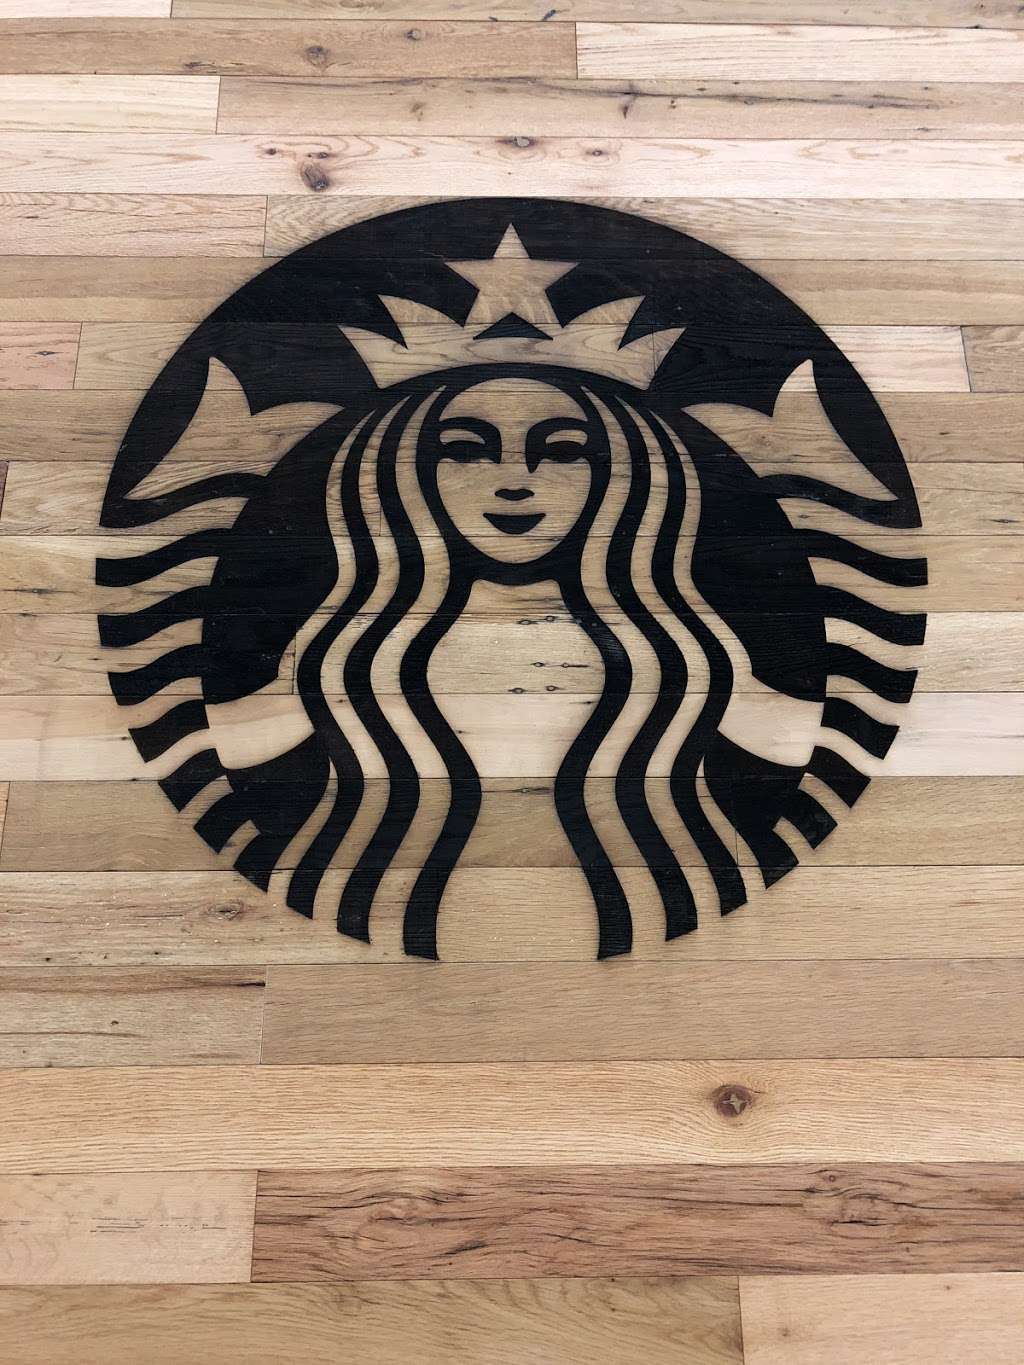 Starbucks | Newark, NJ 07114, USA